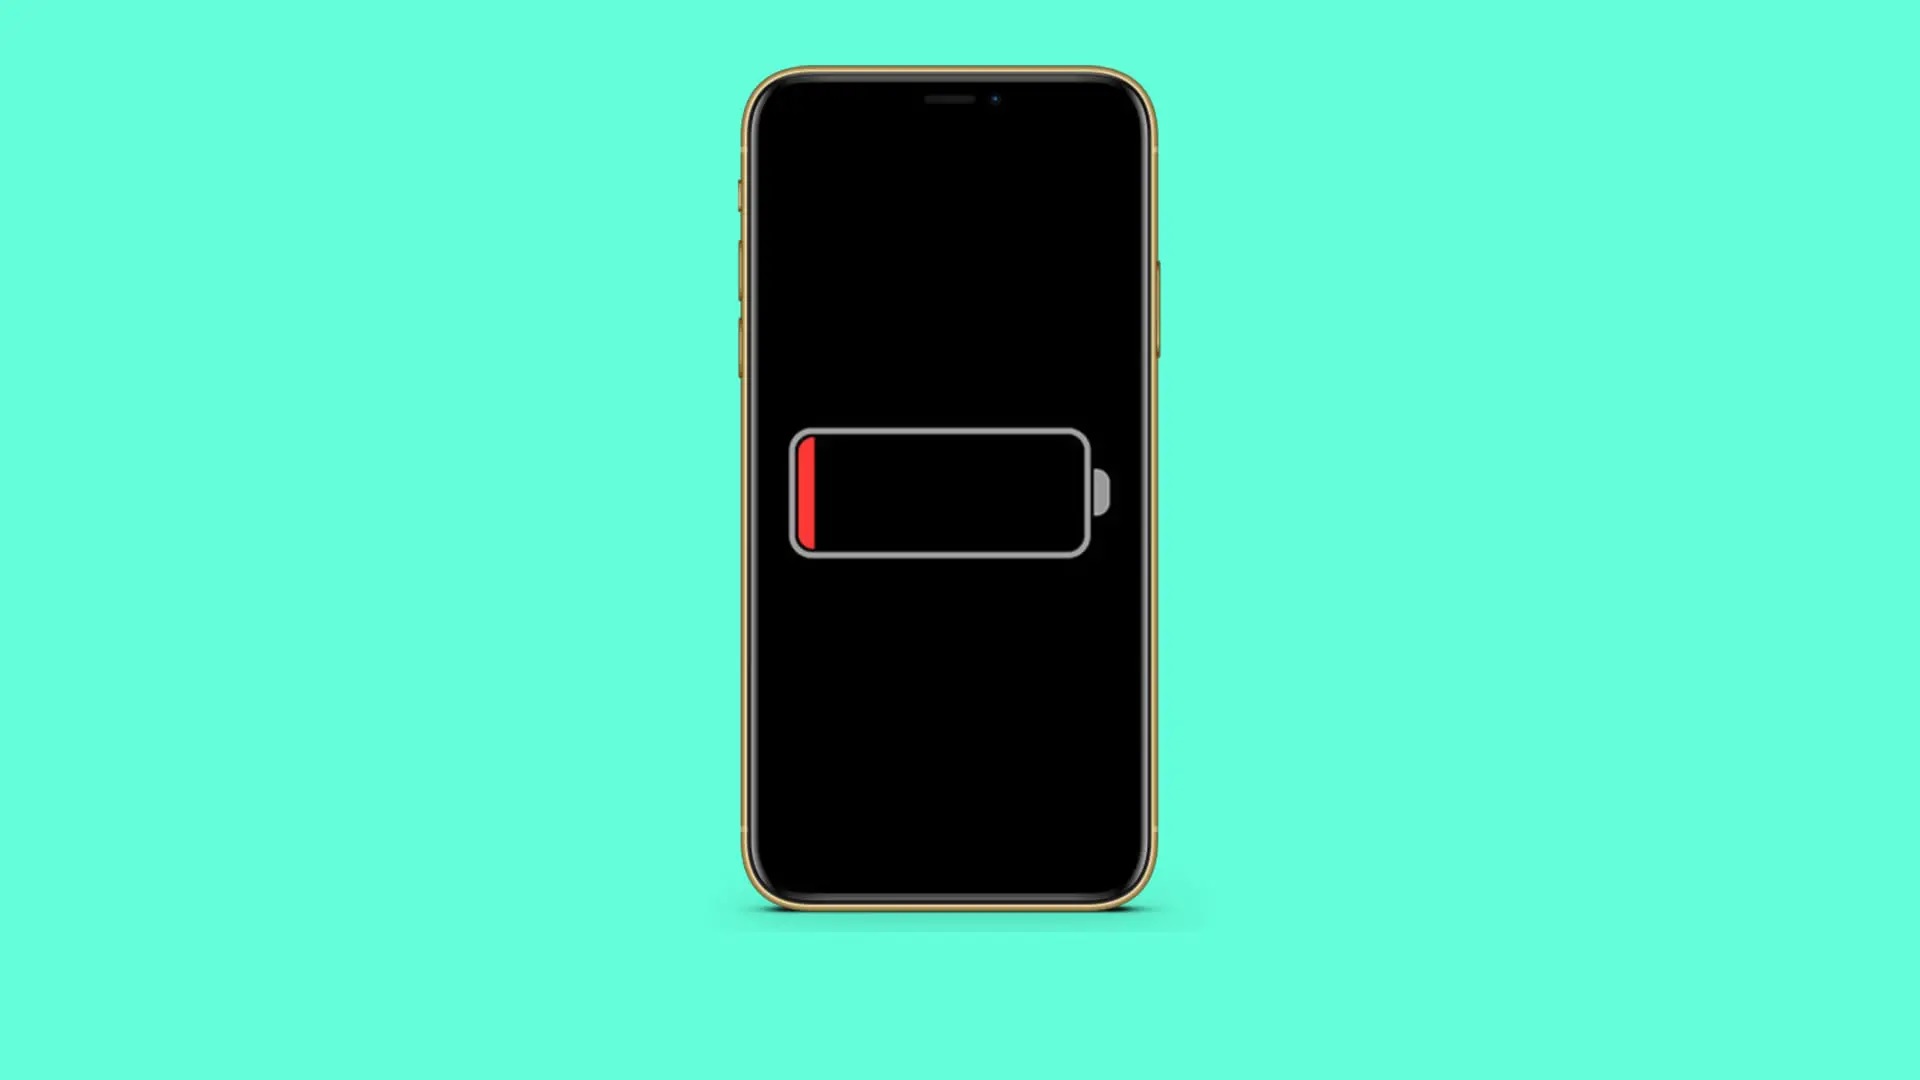 Batteria scarica - iPhone